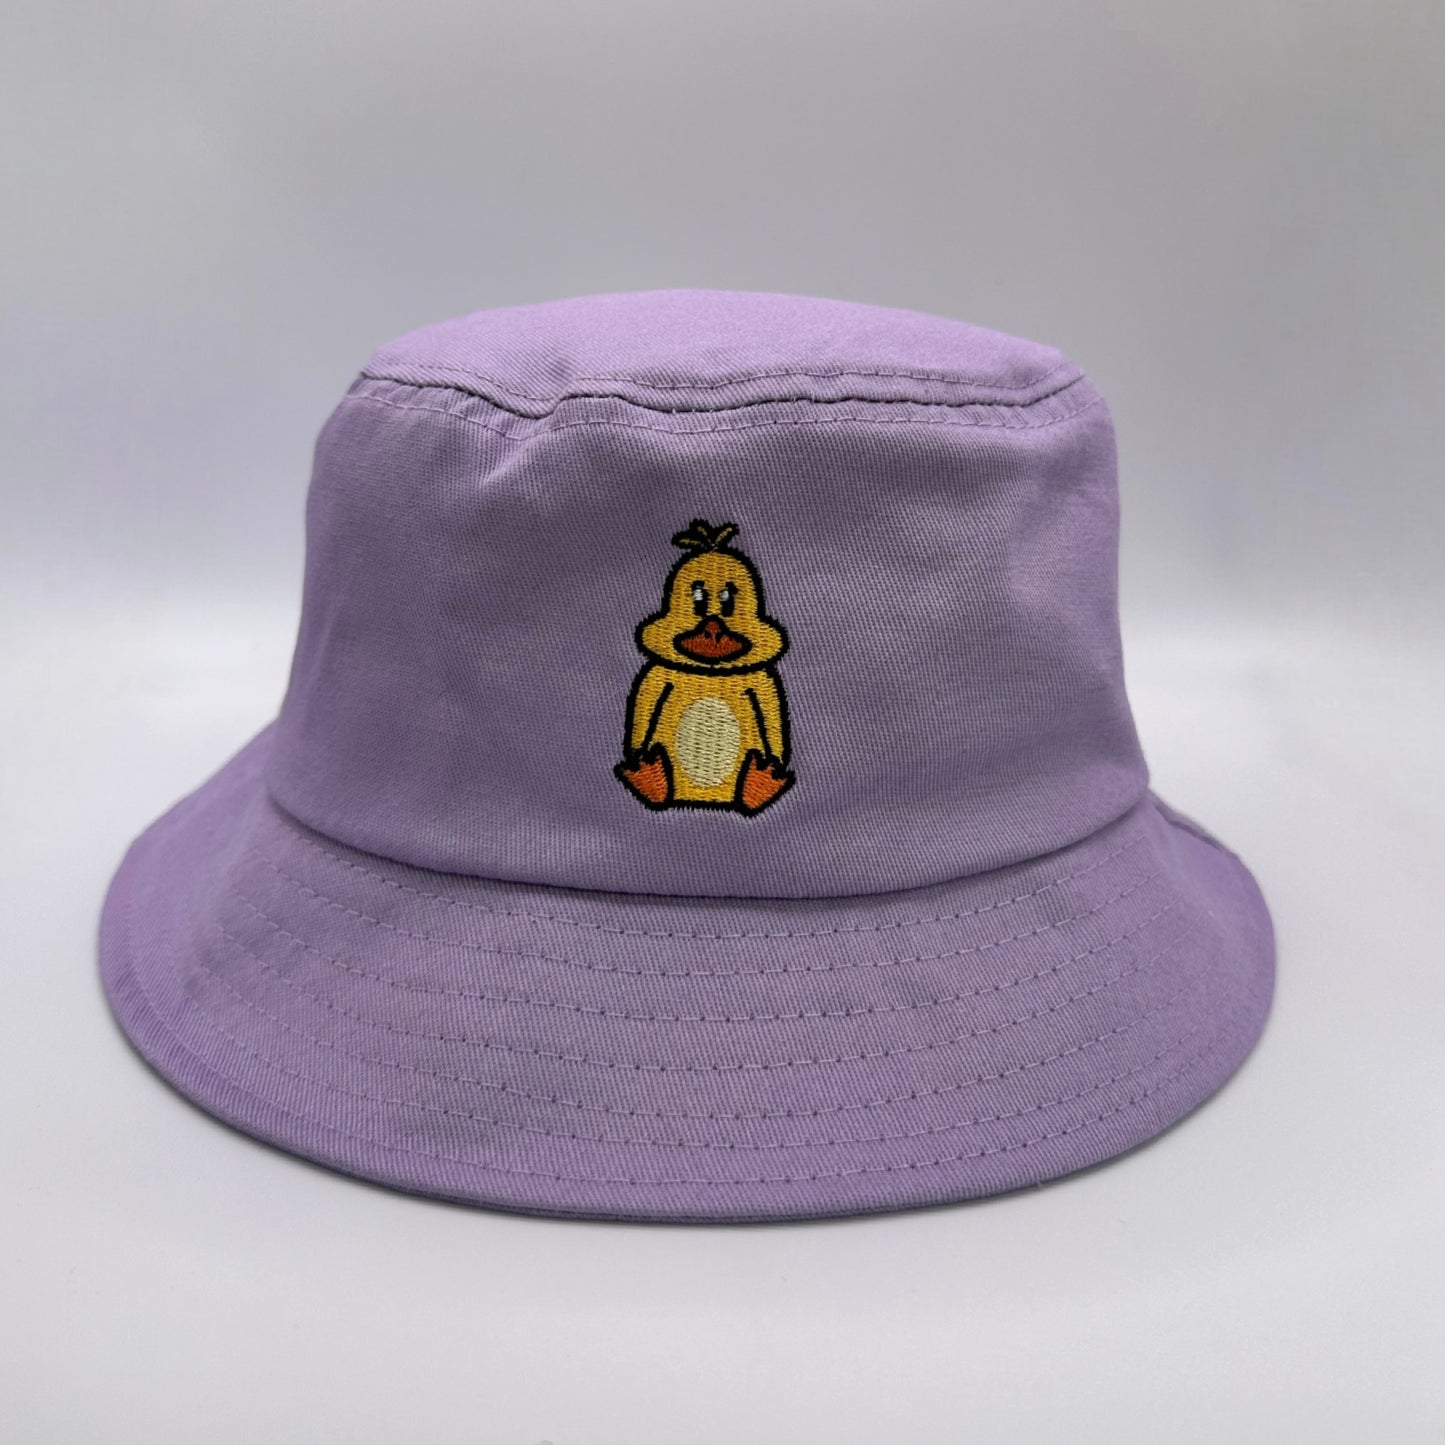 The Official Duckett's Bucket Hat - Purple